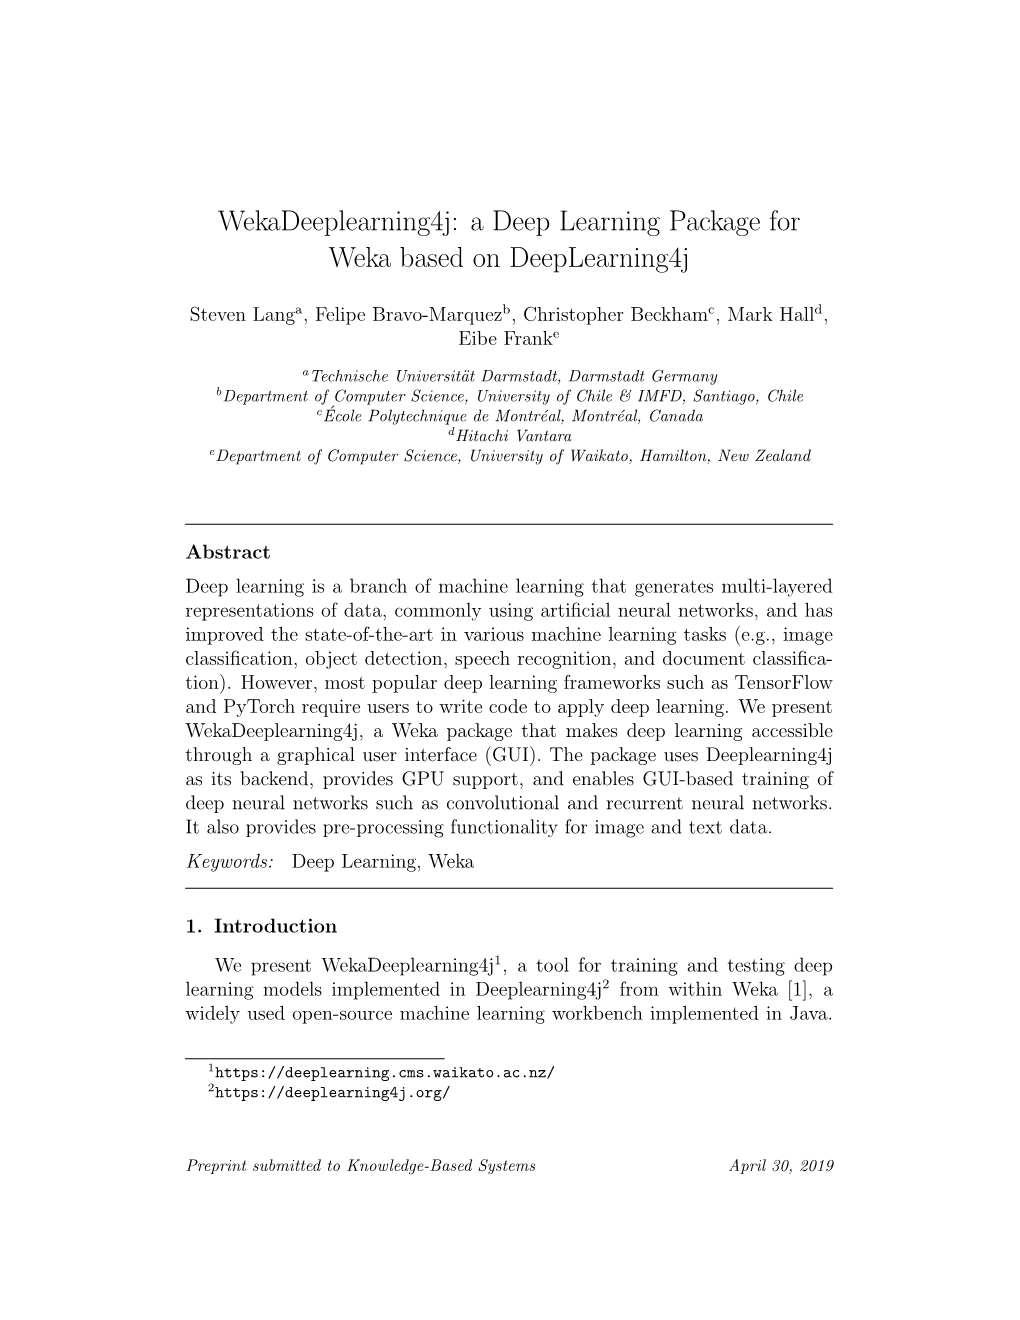 Wekadeeplearning4j: a Deep Learning Package for Weka Based on Deeplearning4j